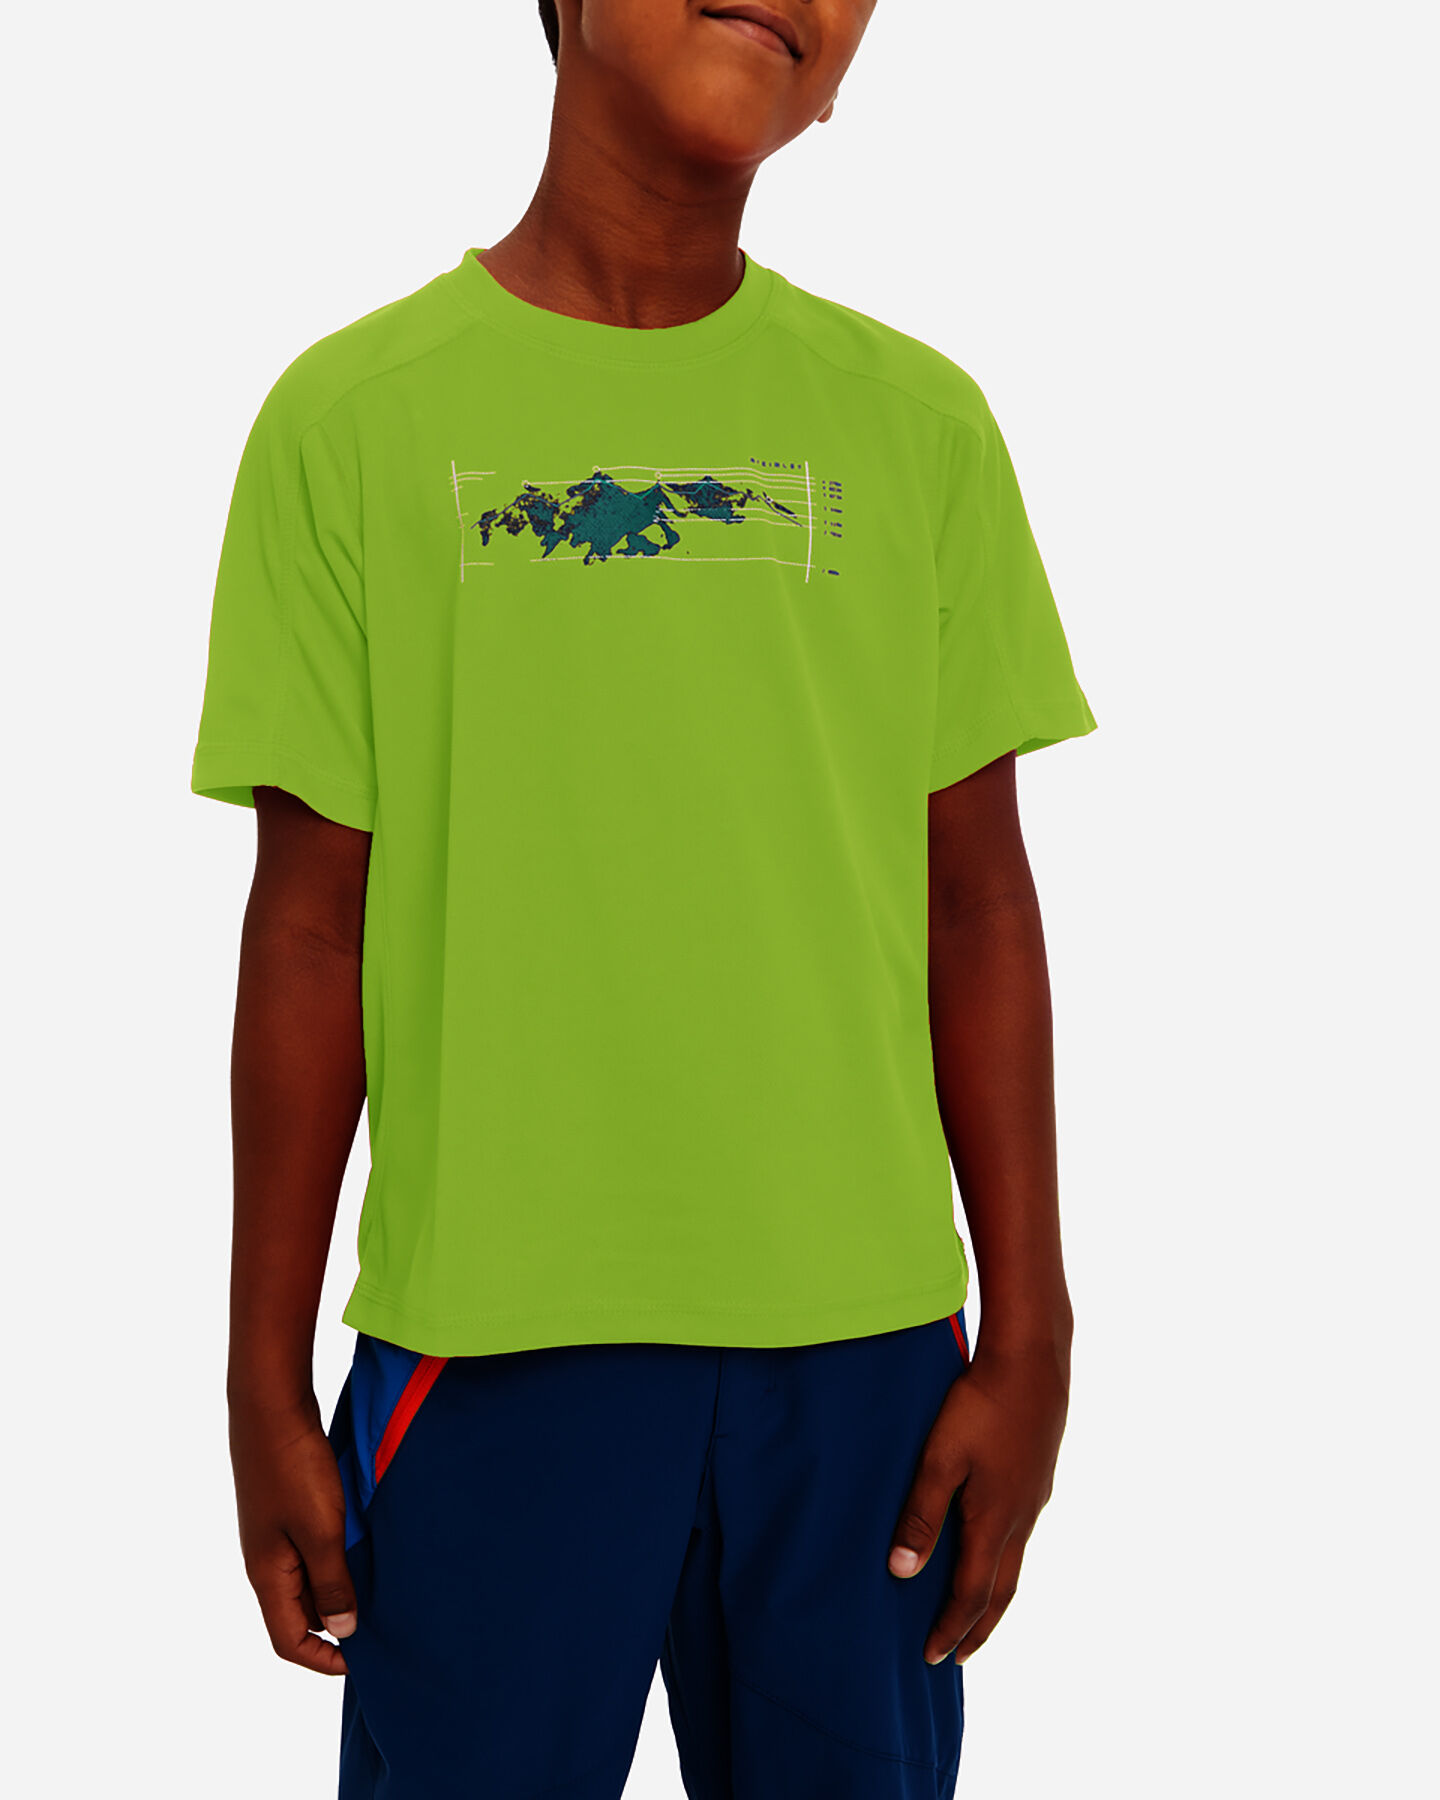  T-Shirt MCKINLEY CORMA III JR S5511153|694|128 scatto 3